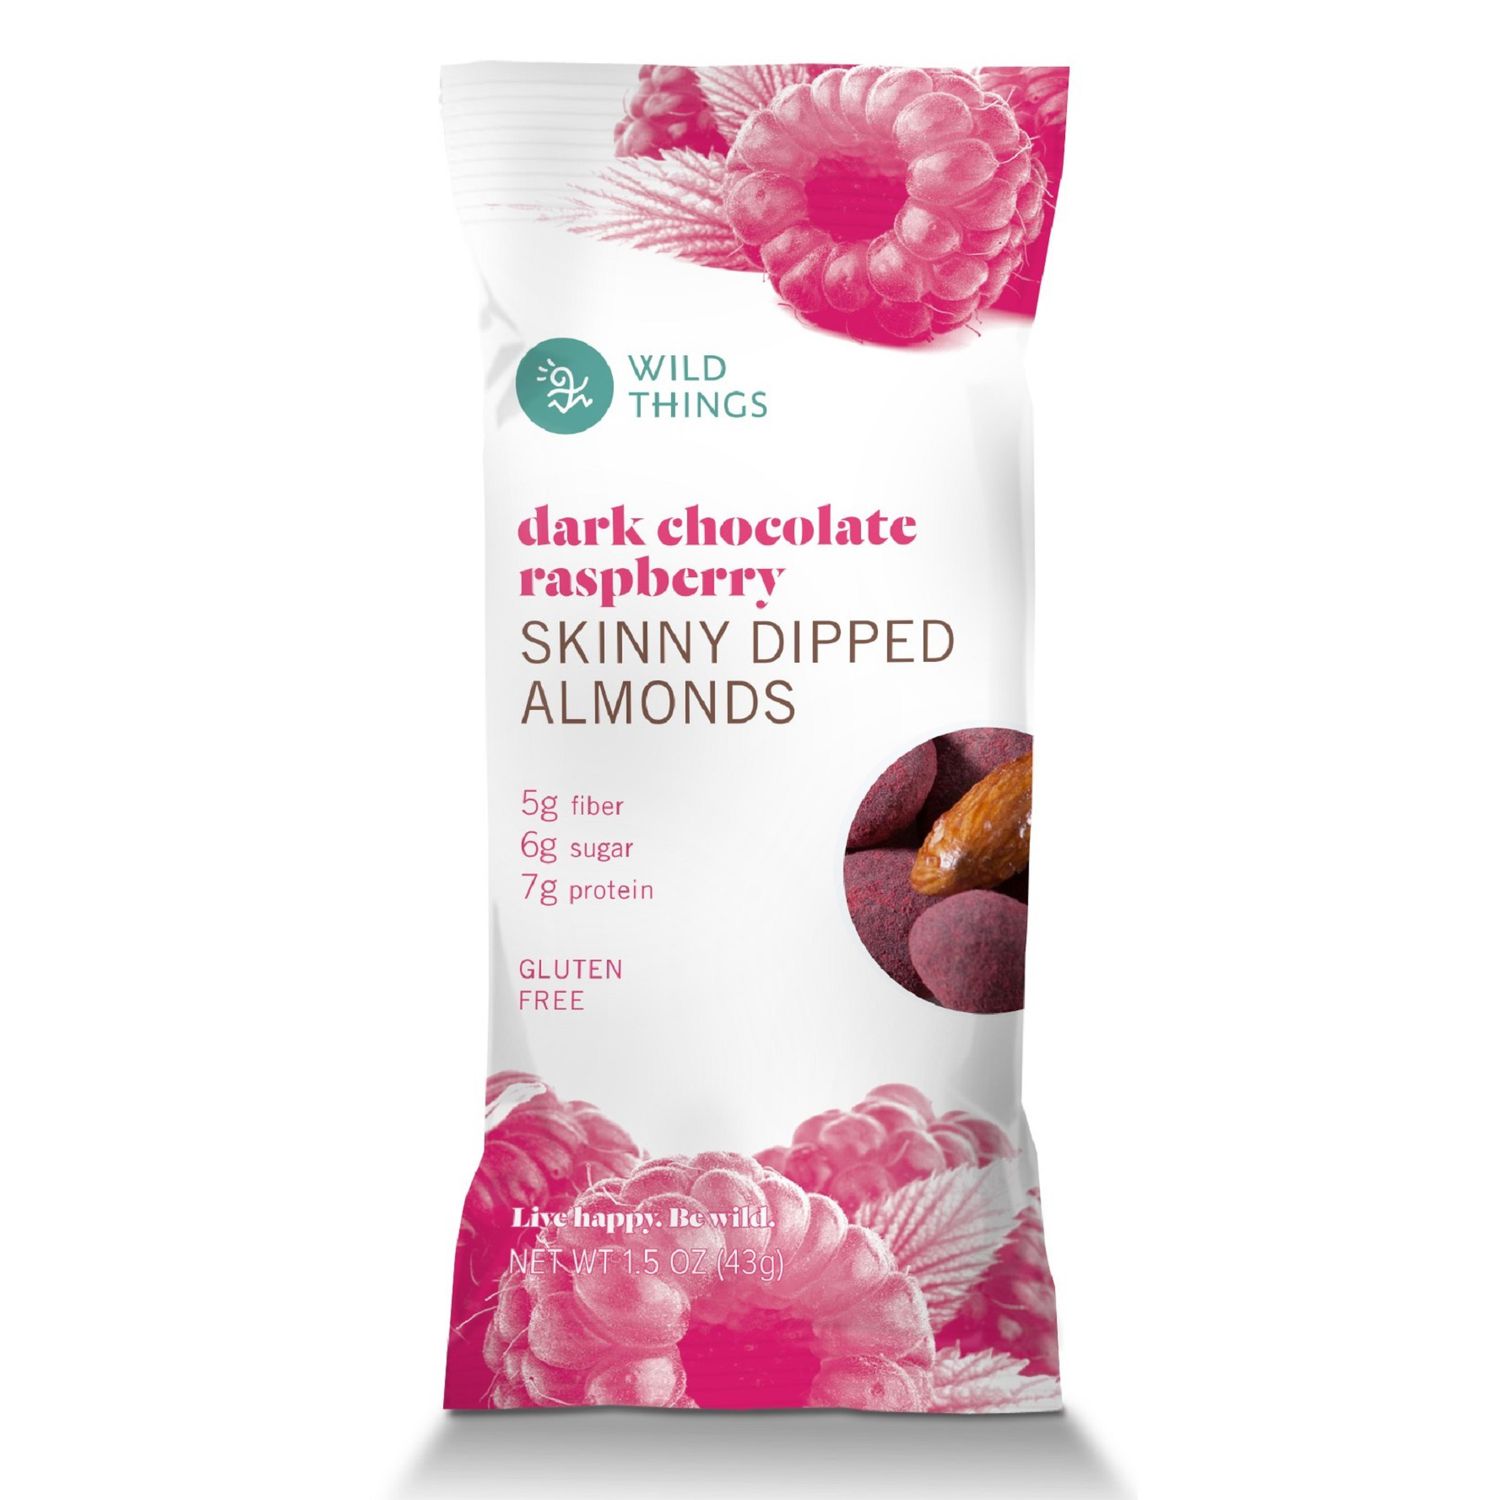 Dark-Chocolate-Raspberry-Skinny-Dipped-Almonds-for-Martha-Stewart-Valentine-s-Day.jpg (skyword:225655)